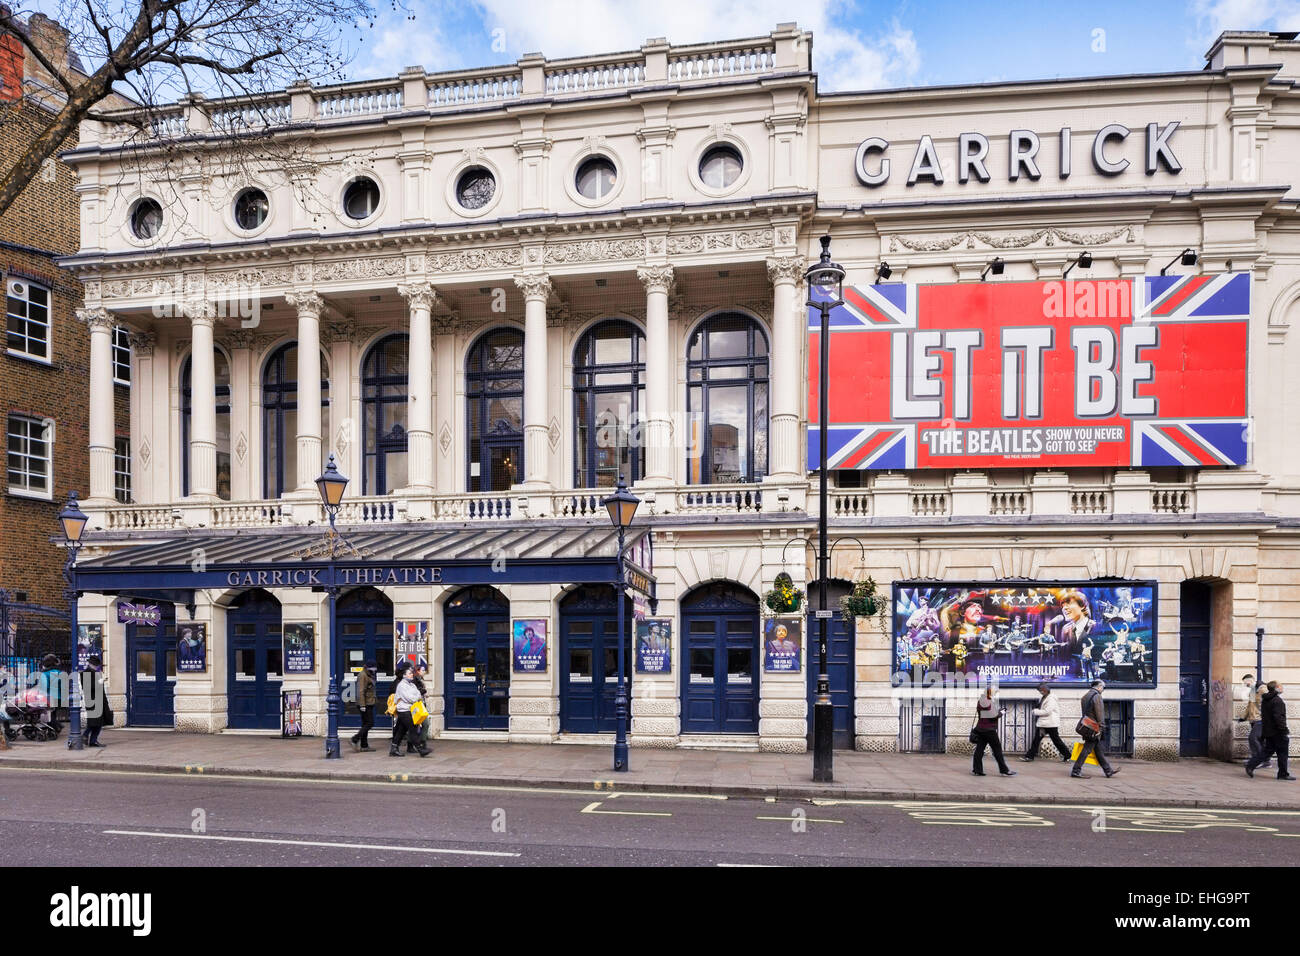 The Garrick Theatre, Charing Cross Road, London Stock Photo